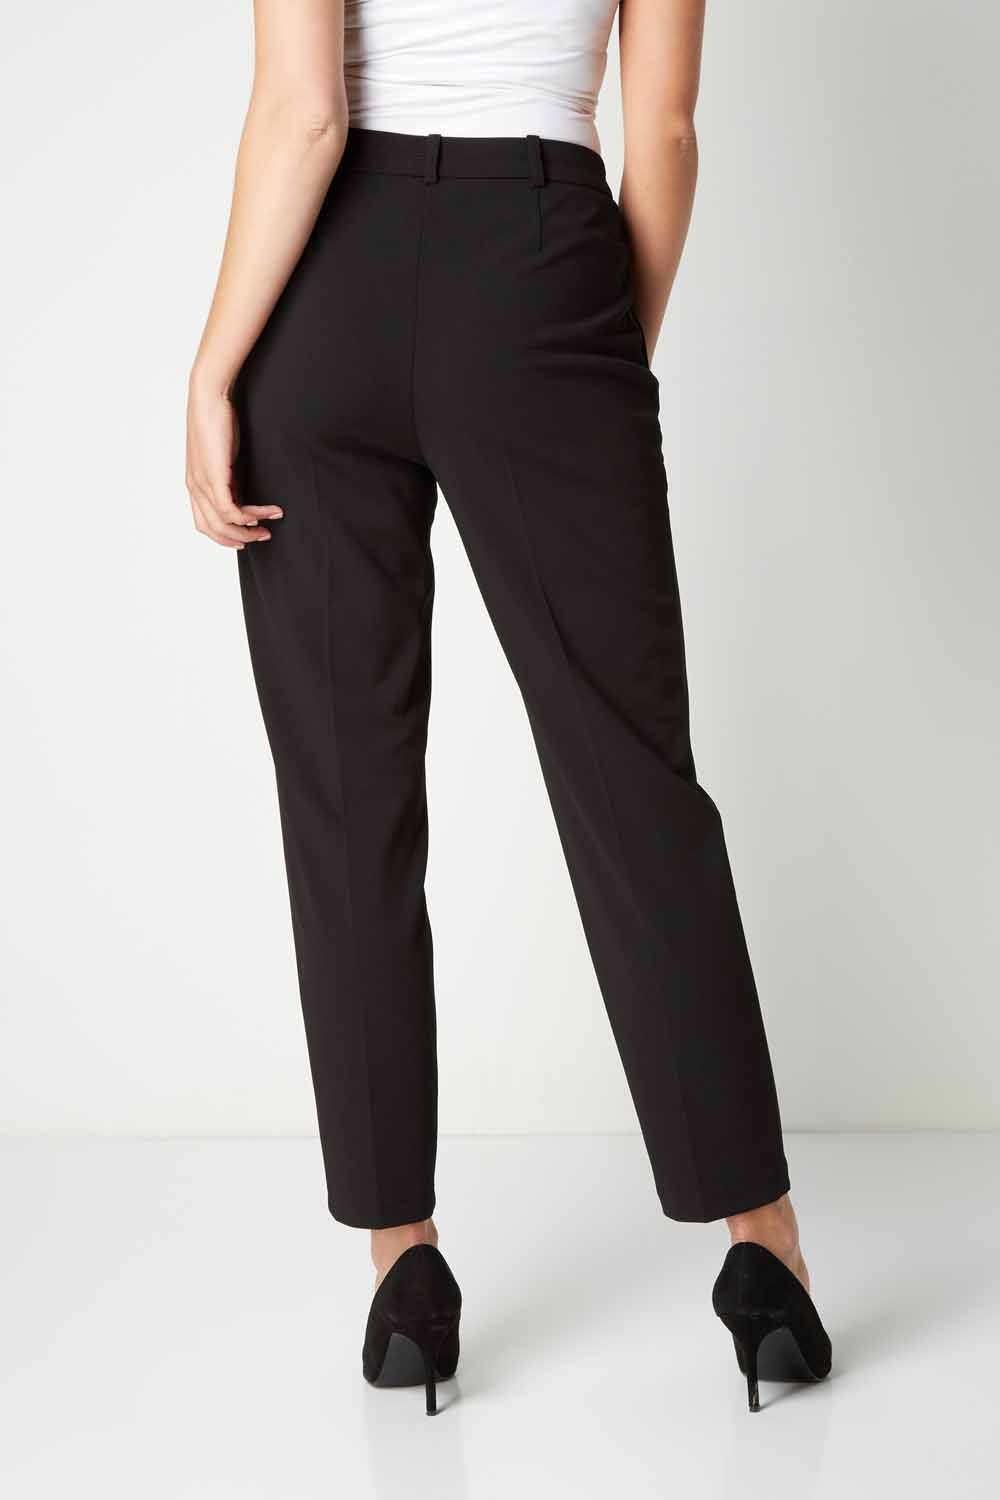 LEE TEX Regular Fit Women Black Trousers  Buy LEE TEX Regular Fit Women  Black Trousers Online at Best Prices in India  Flipkartcom